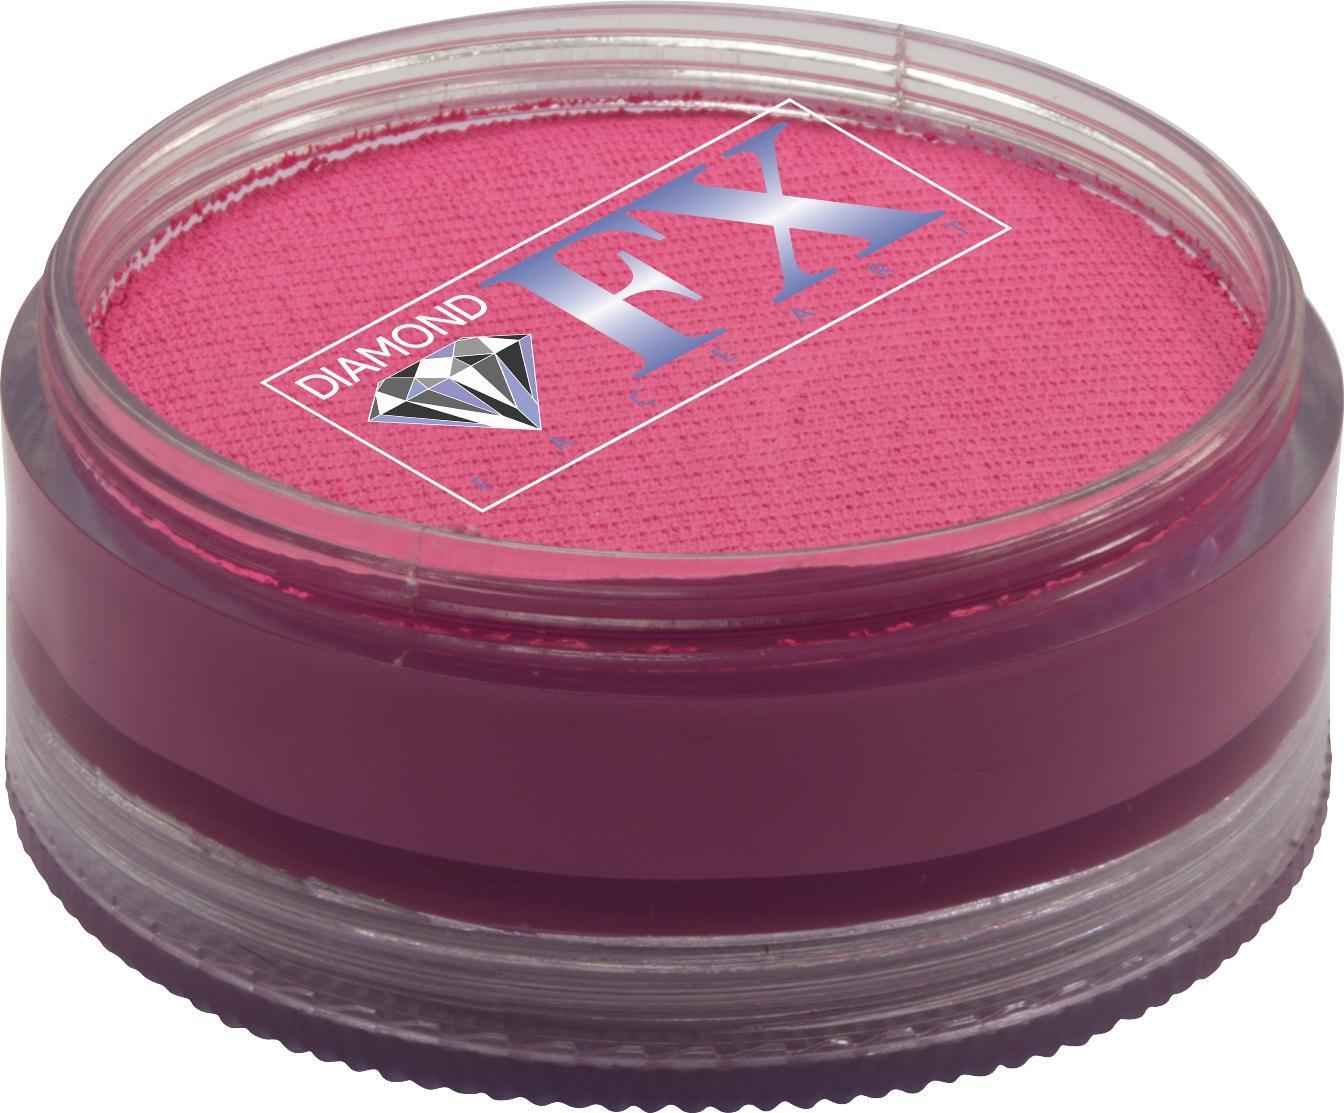 Diamond FX Pink 90g - Small Image